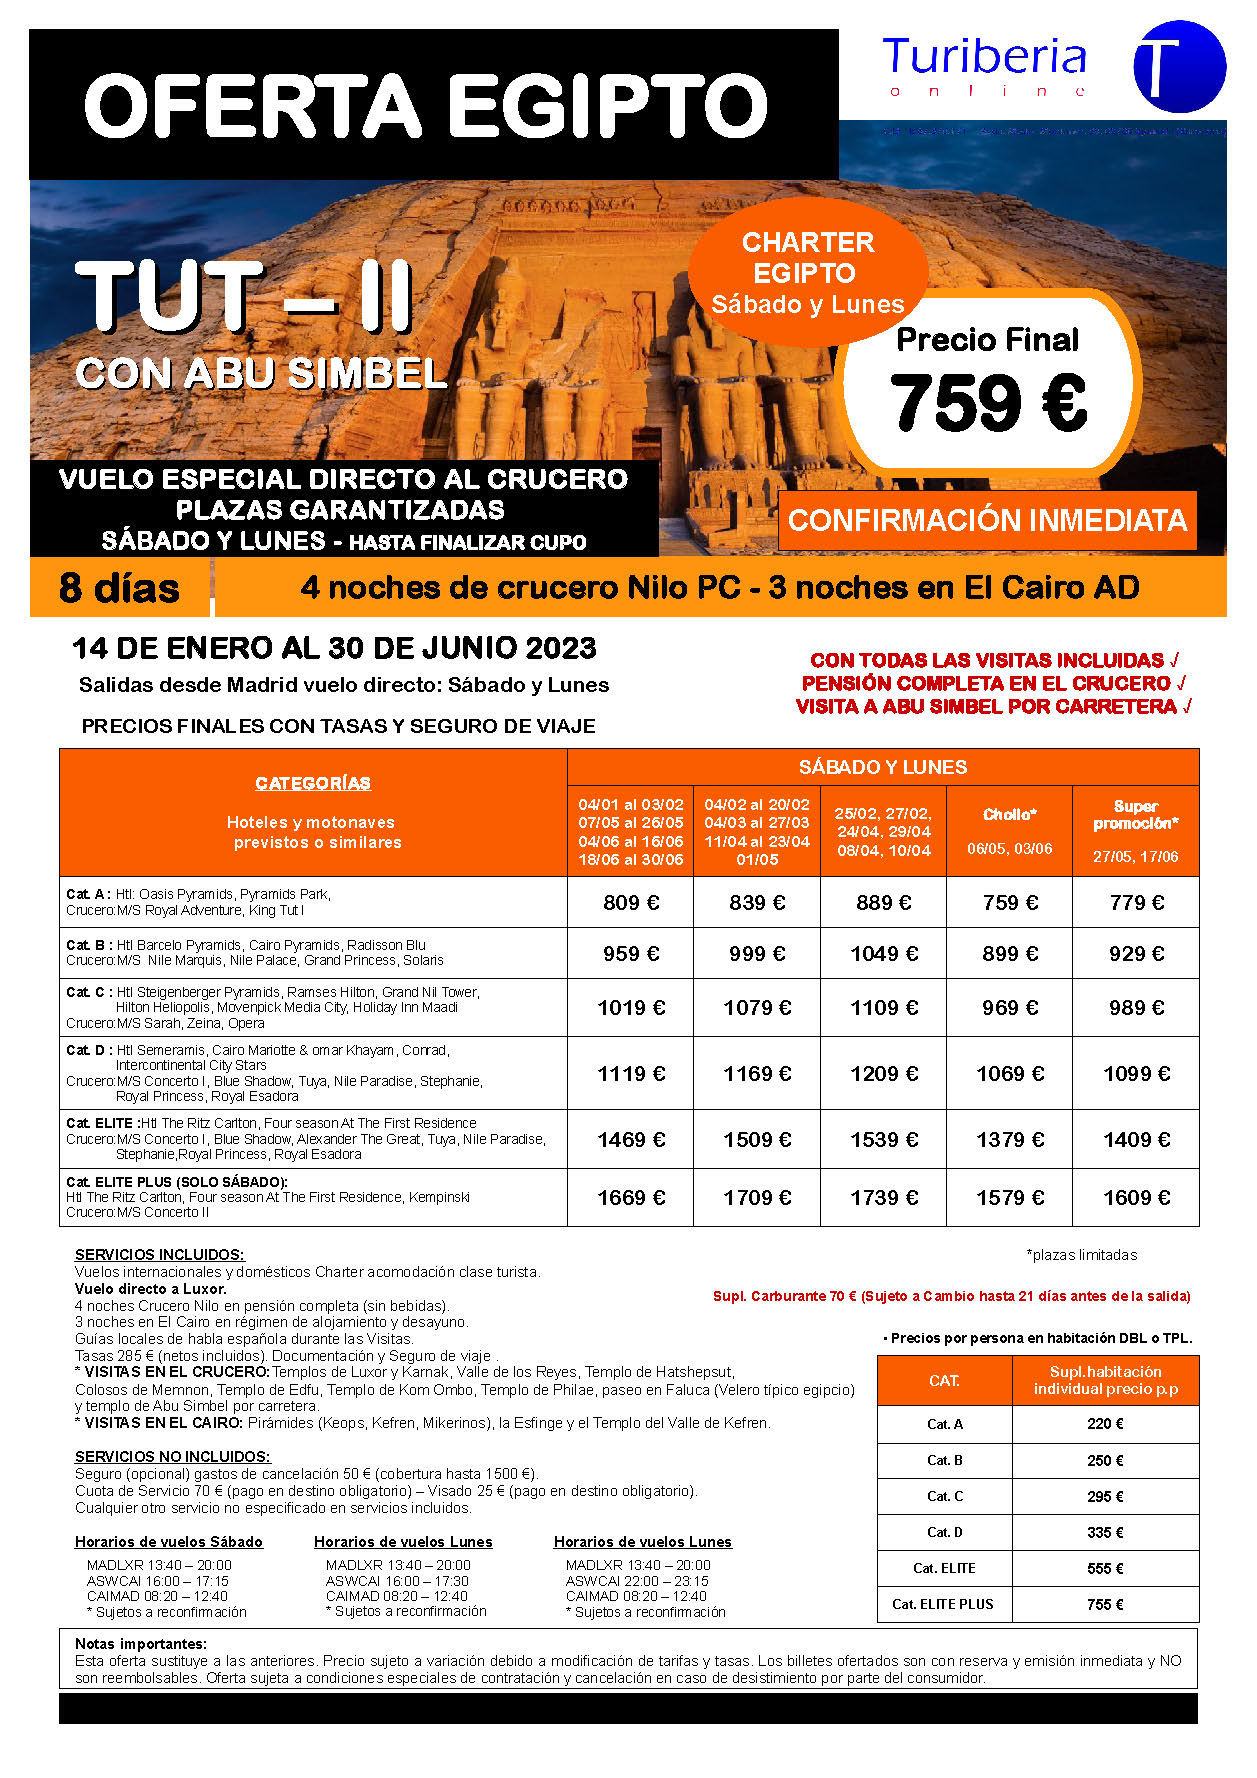 Ofertas Turiberia 2023 Egipto Charter Esencial TUT-II con Abu Simbel 8 dias salida en vuelo especial directo desde Madrid